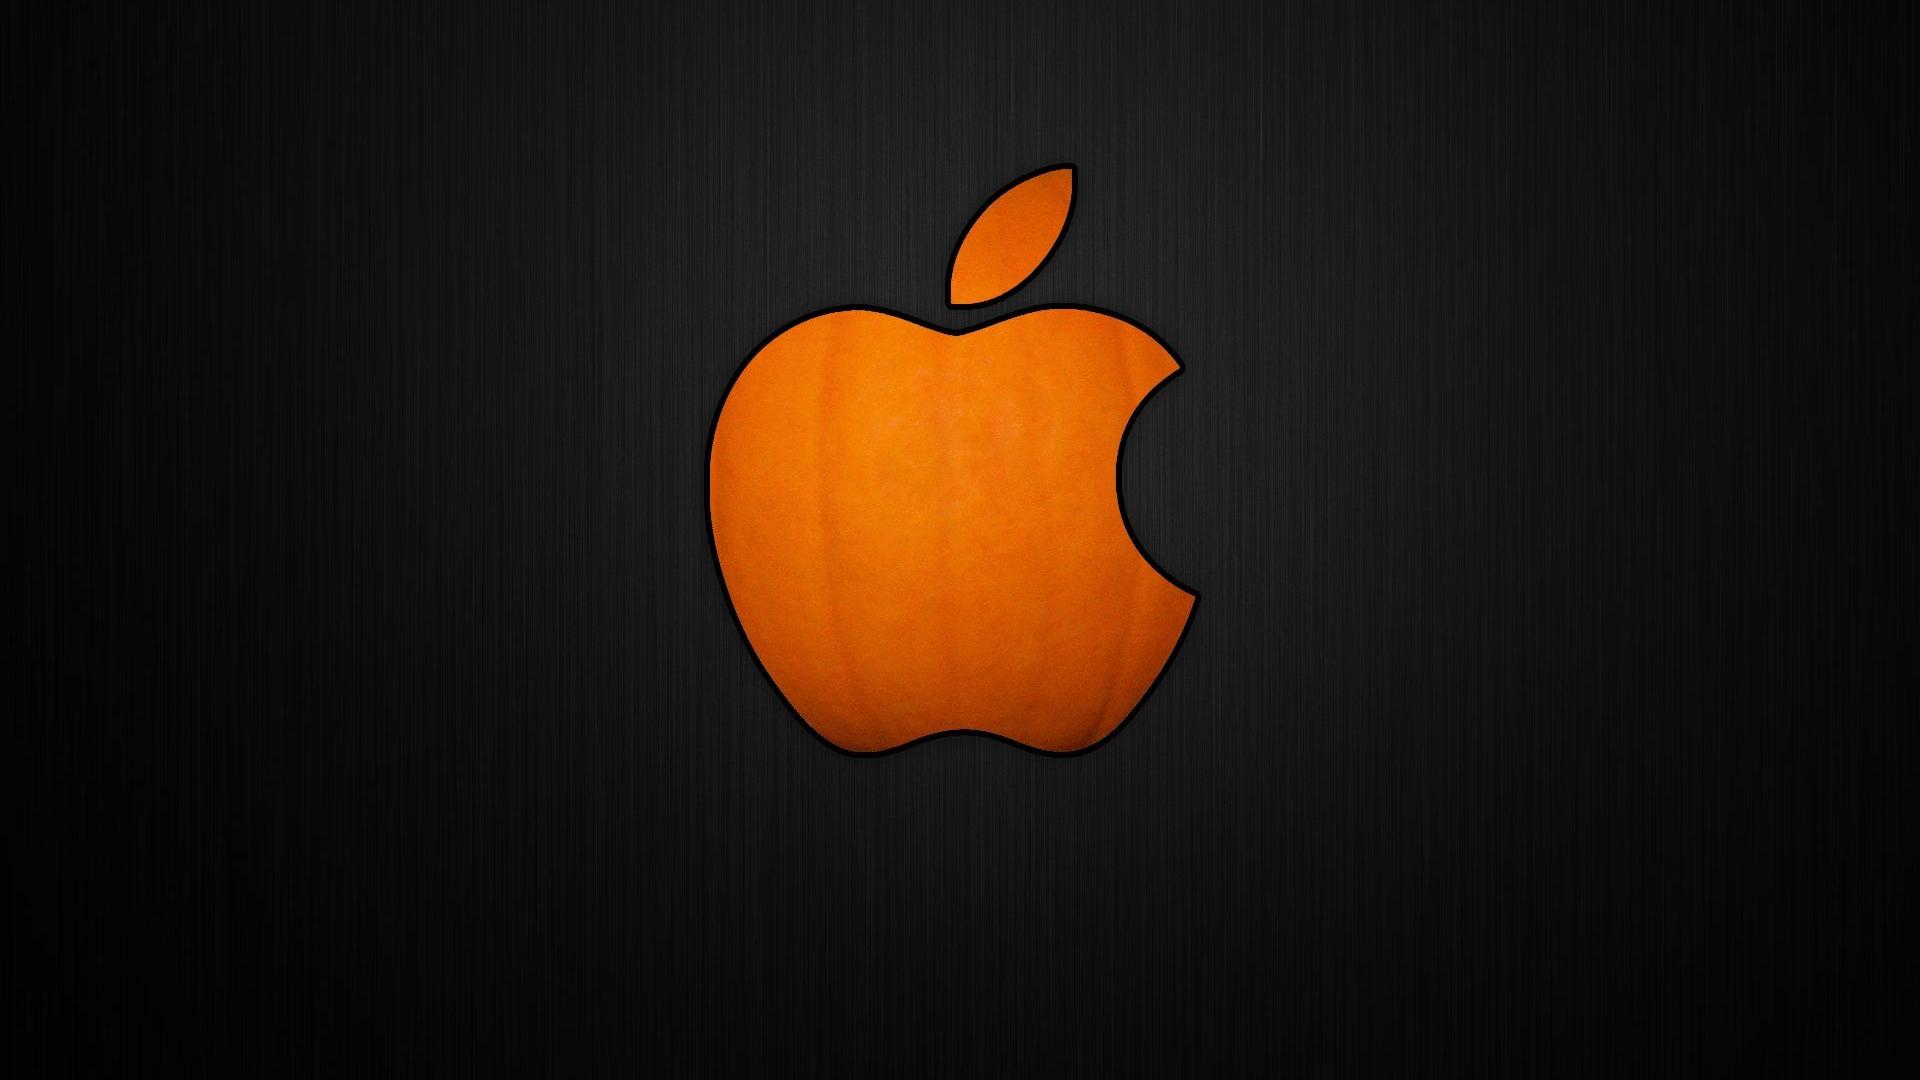 Cool Pictures Apple Logo HD Wallpaper of Logo   hdwallpaper2013com 1920x1080